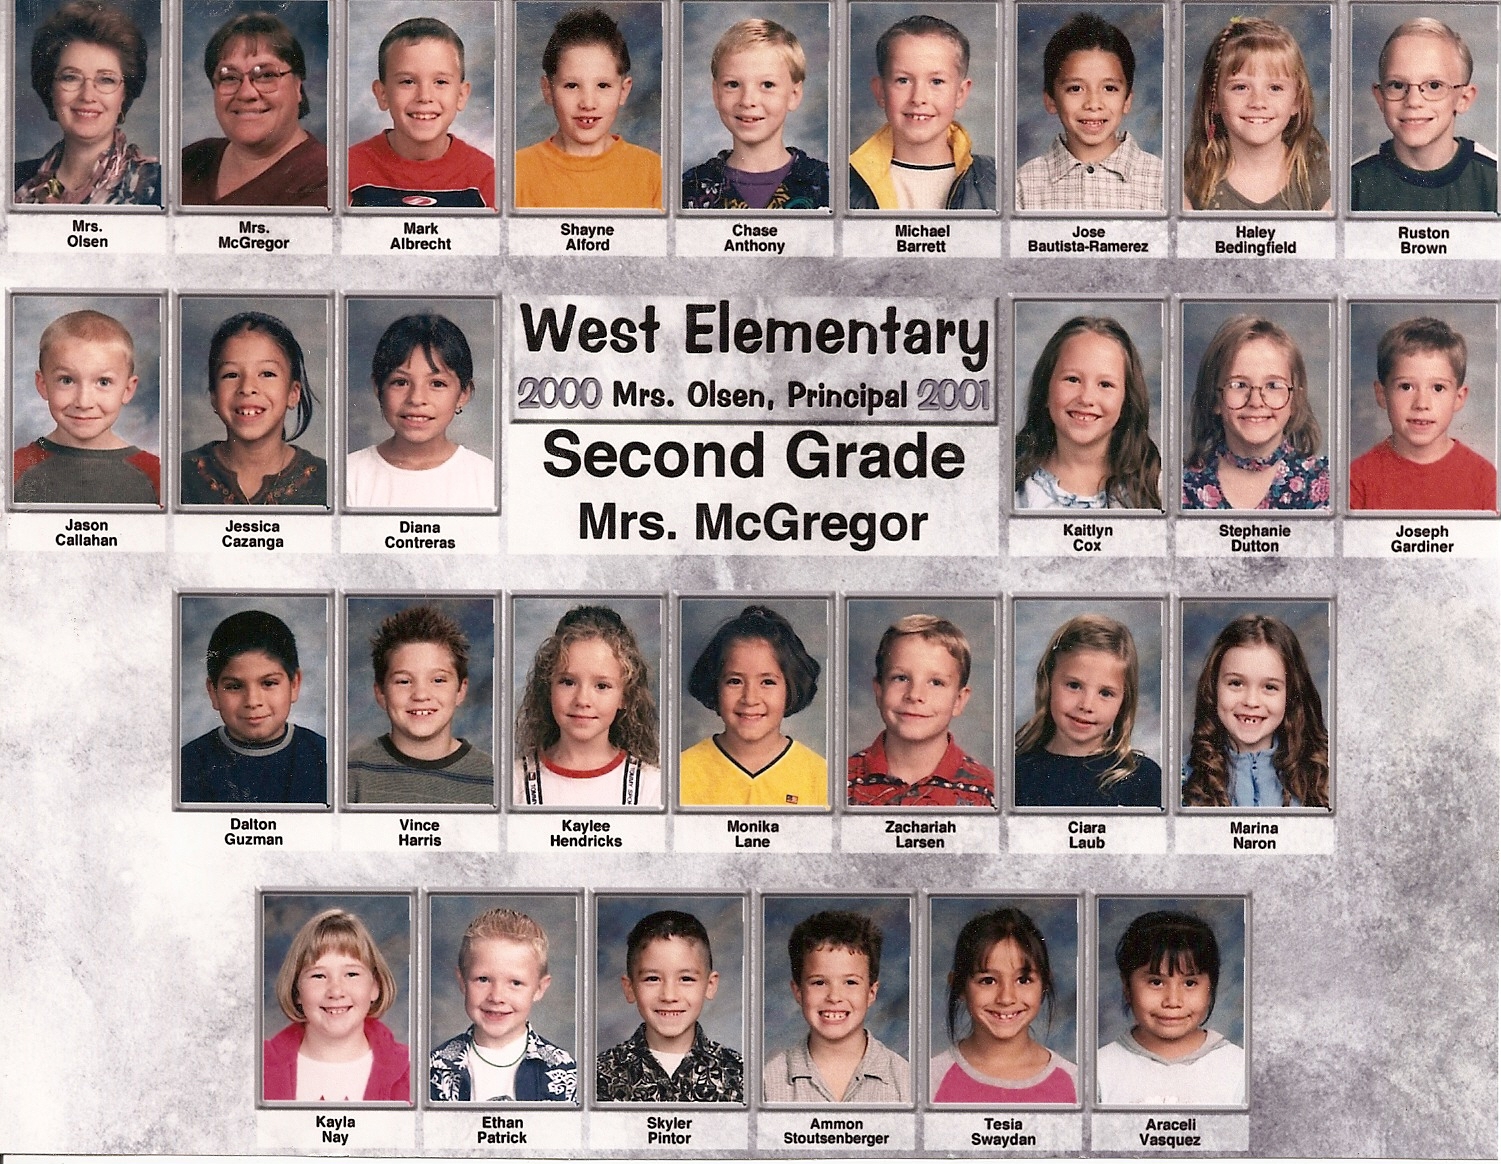 Mrs. LaRae McGregor's 2000-2001 second grade class at West Elementary School